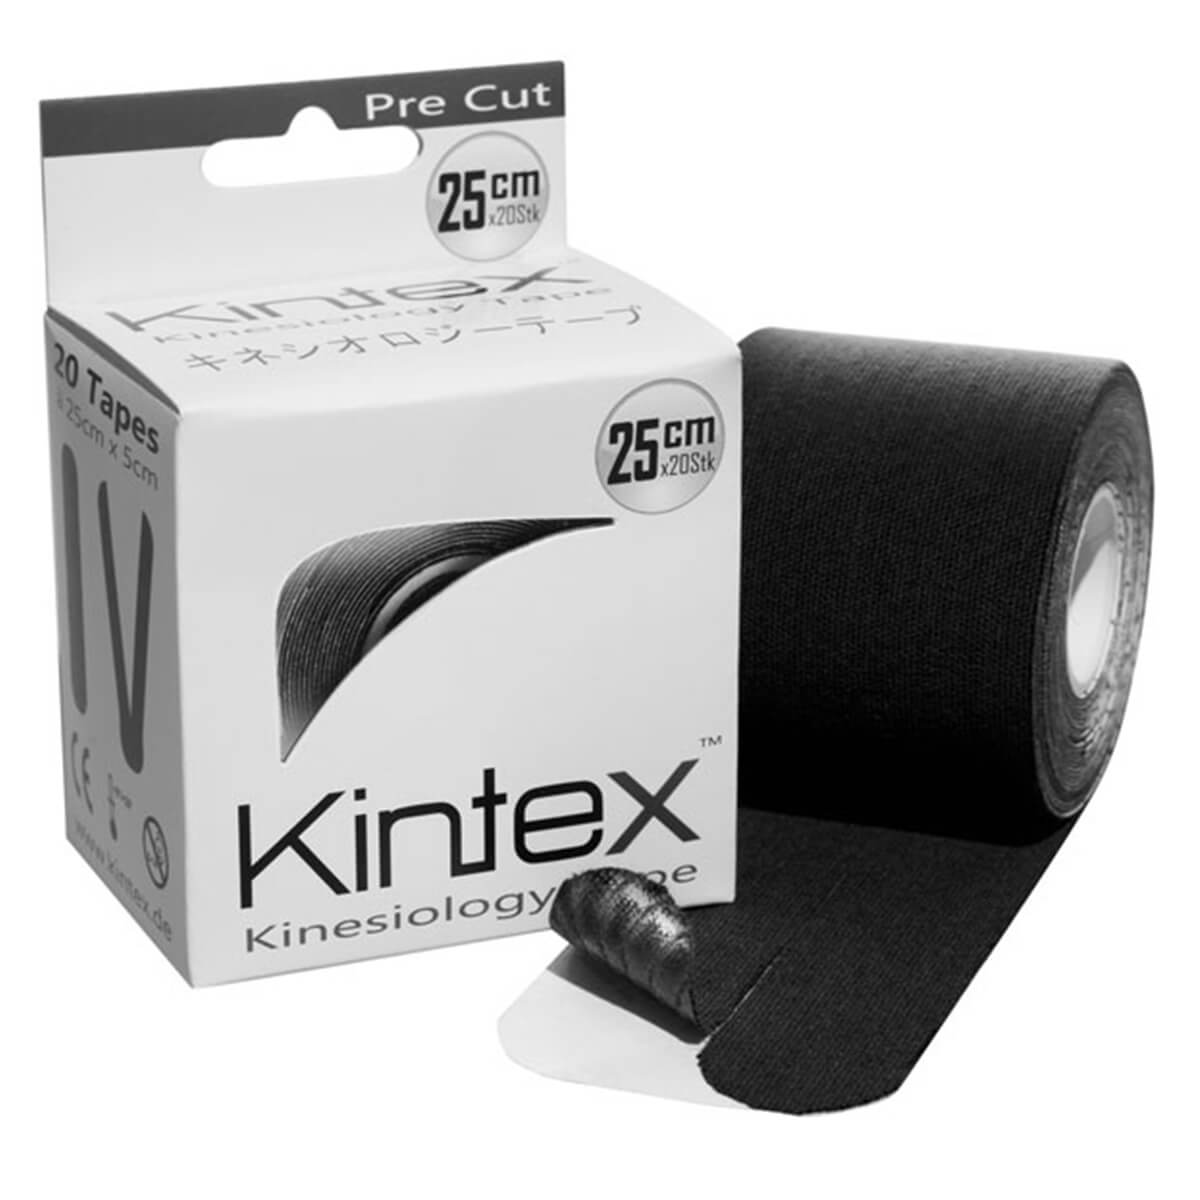 Kintex Kinesiologie Tape "PreCut"